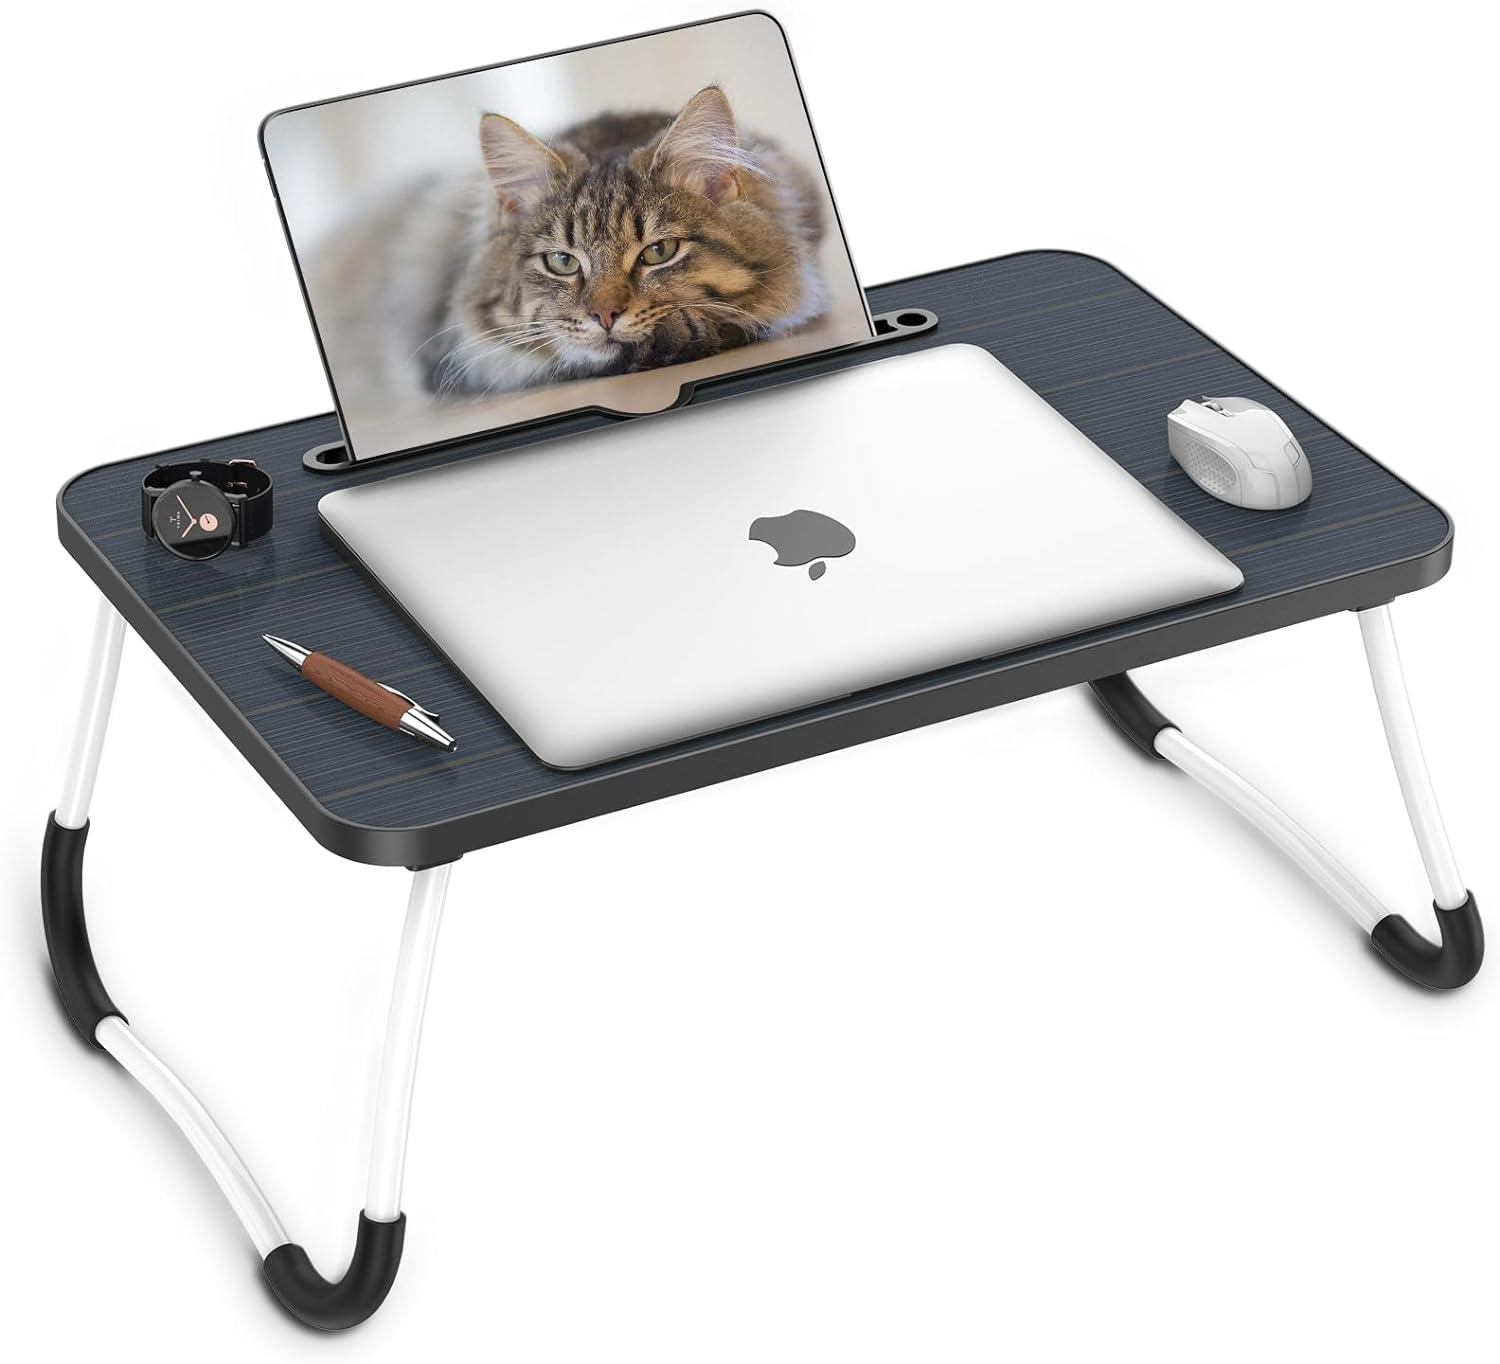 Laptop Bed Desk, Foldable Laptop Table Tray, Lap Desk Laptop Stand for Bed Lap T